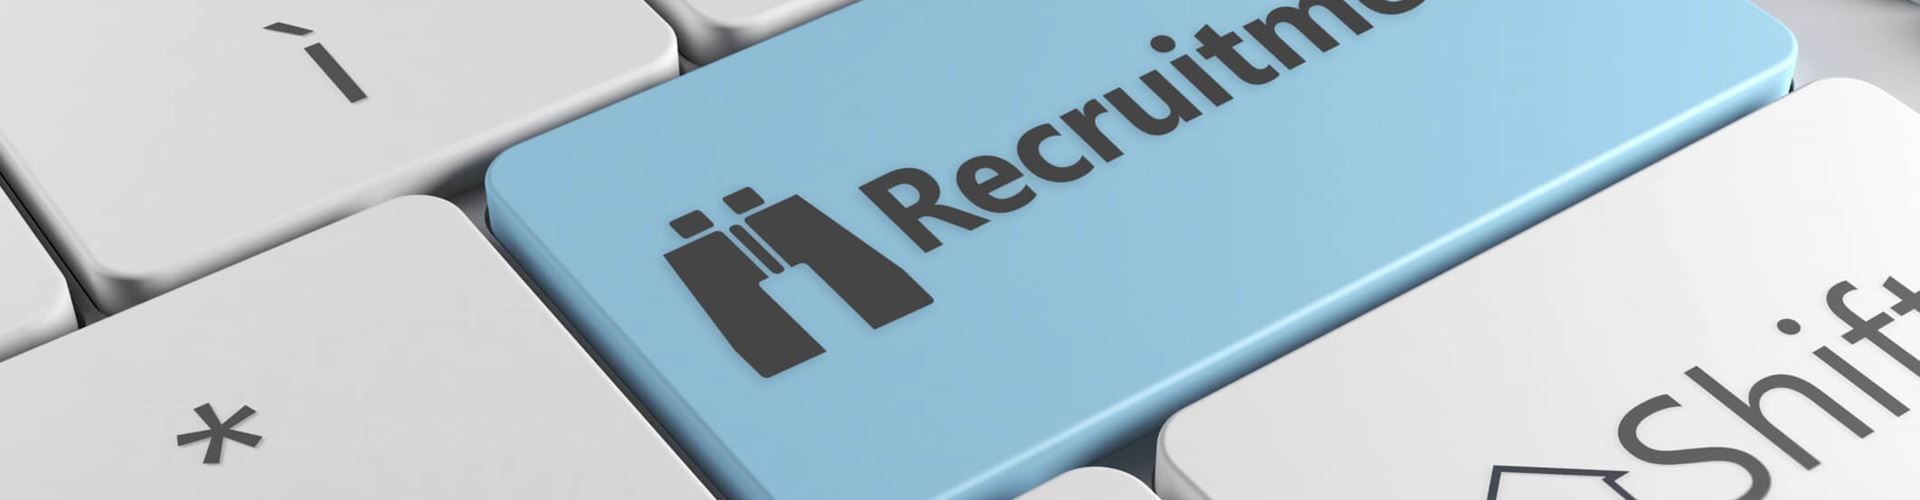 Deloitte to revamp recruitment process to end unconscious class bias